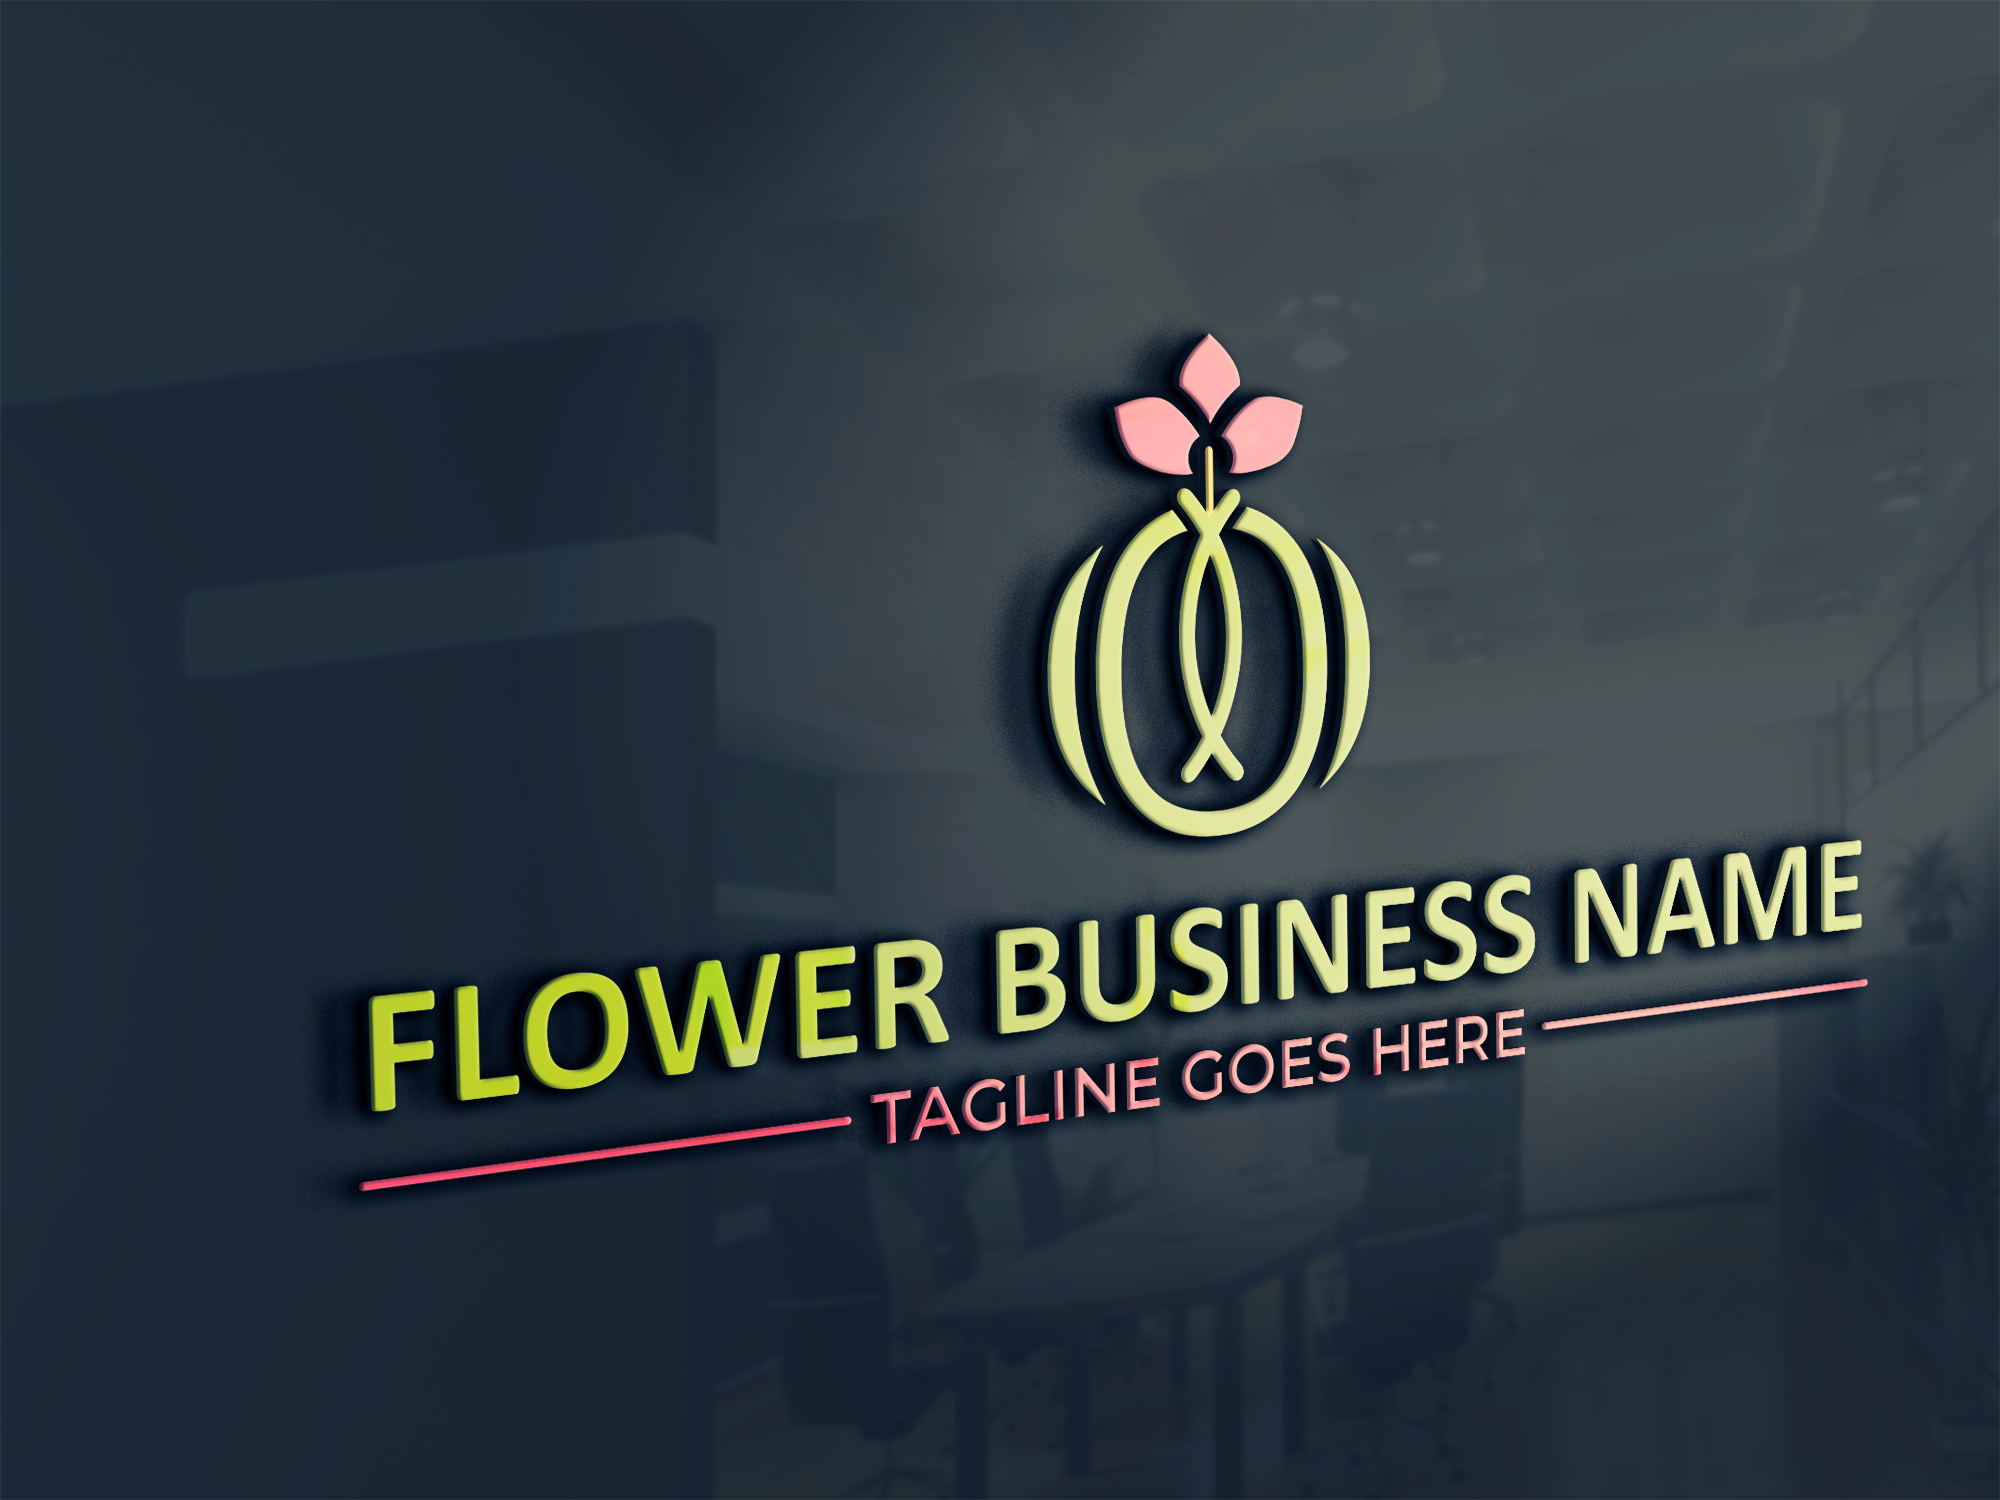 Modern Flower Shop Logo Design